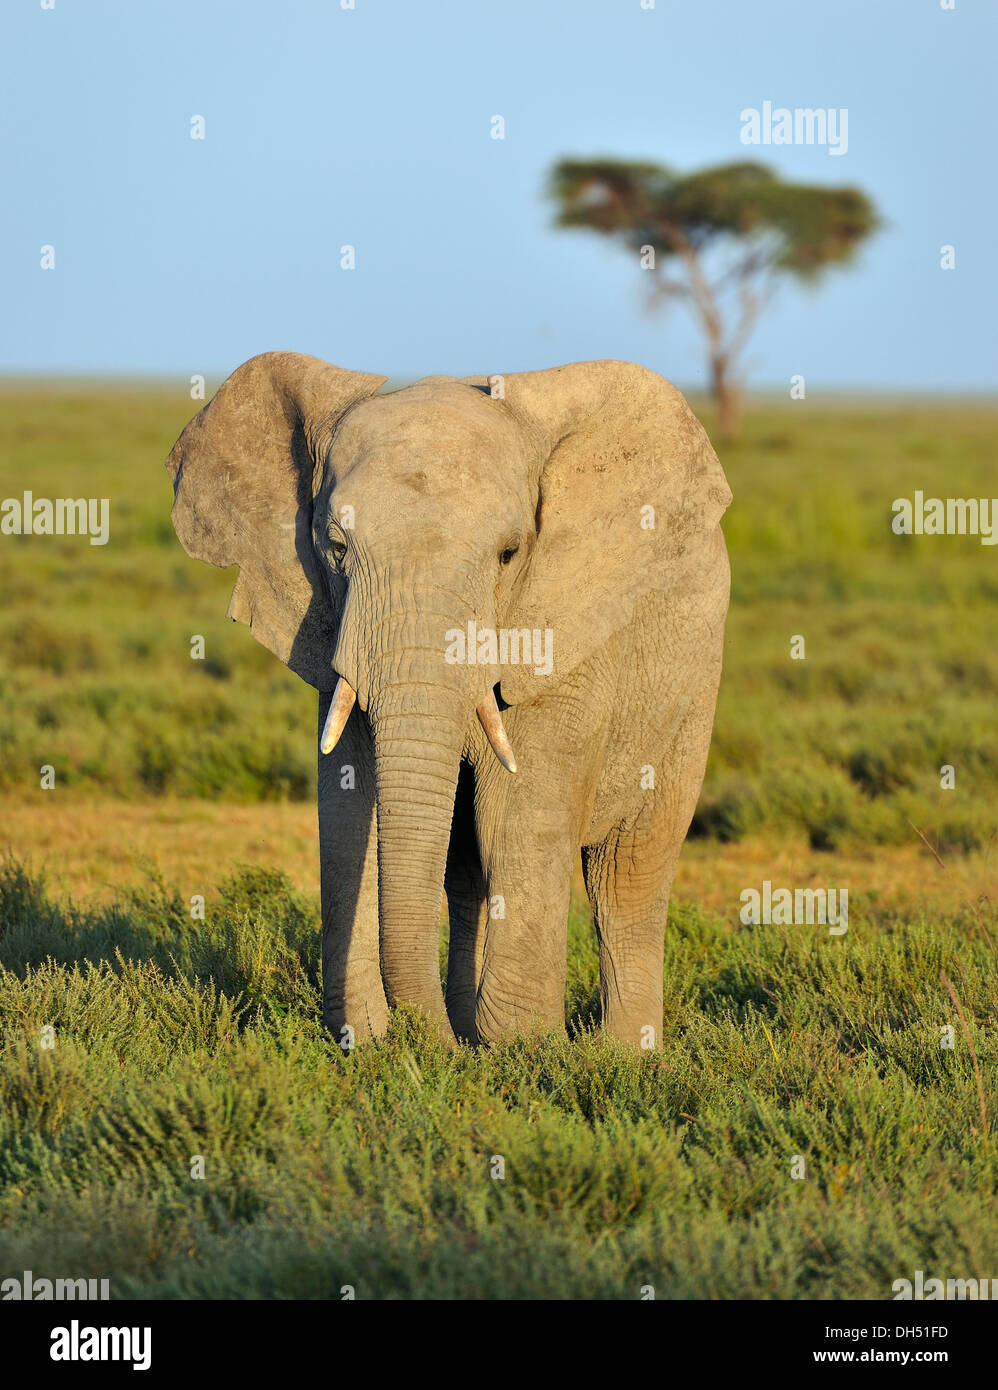 Young African Bush Elephant (Loxodonta africana) dans le paysage de savane, Serengeti, Tanzanie Banque D'Images